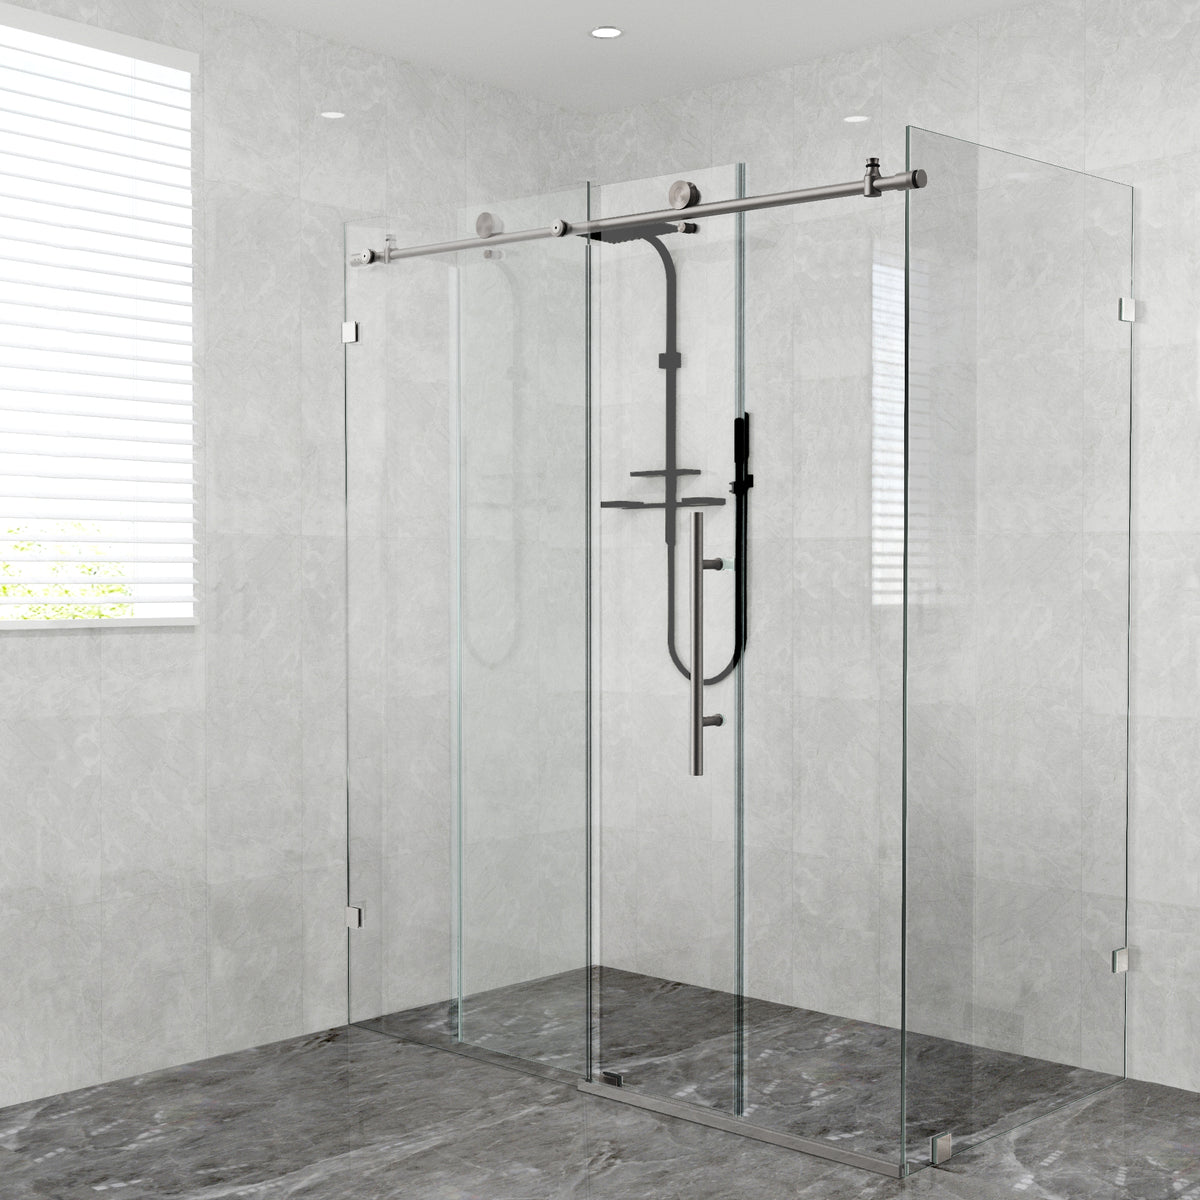 SL4U Frameless Sliding Shower Door With Side Panel, Brushed Nickel Stainless Steel.